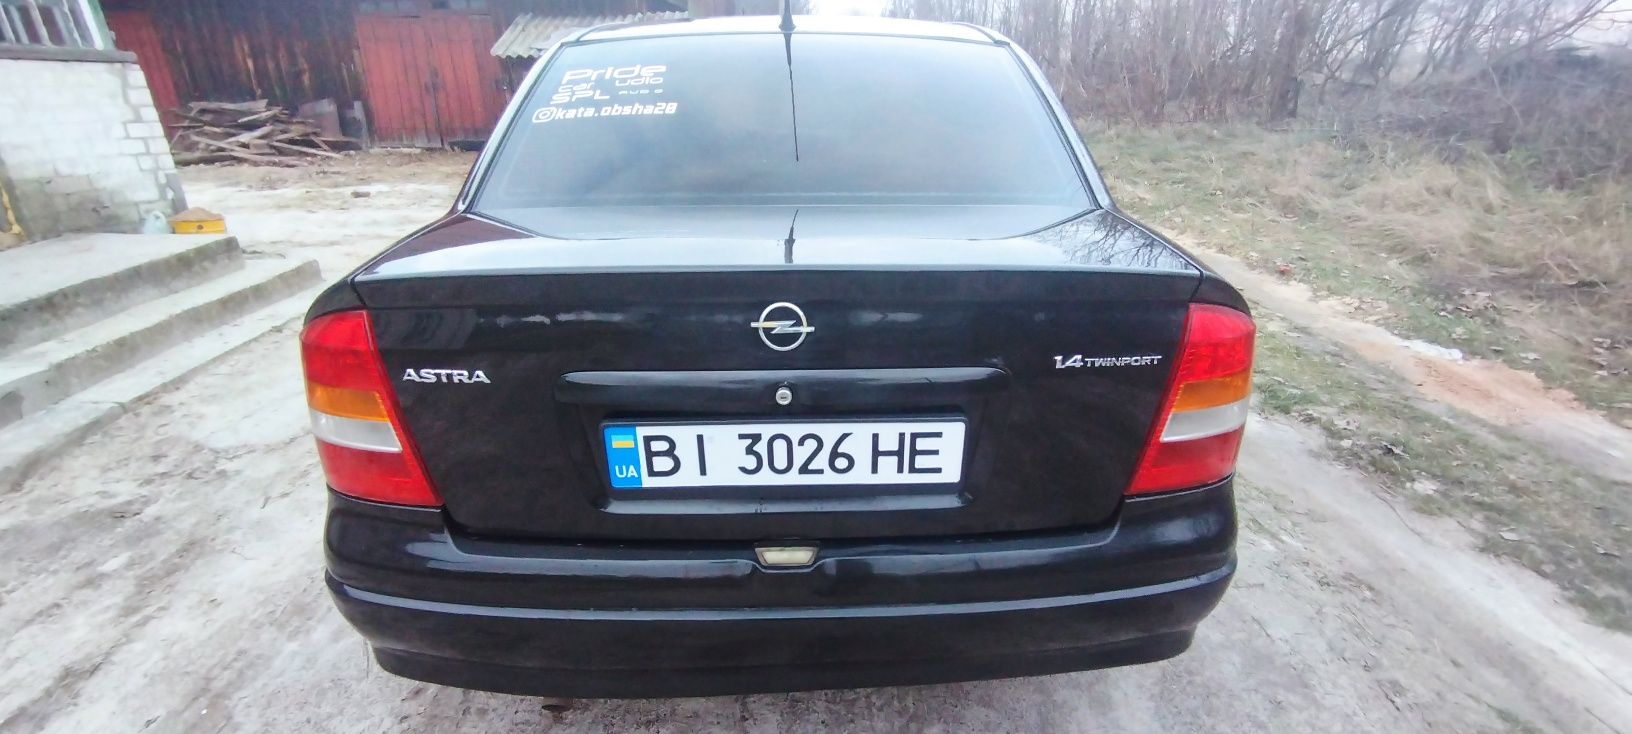 Opel Astra g ,2008 рік ,1.4 .